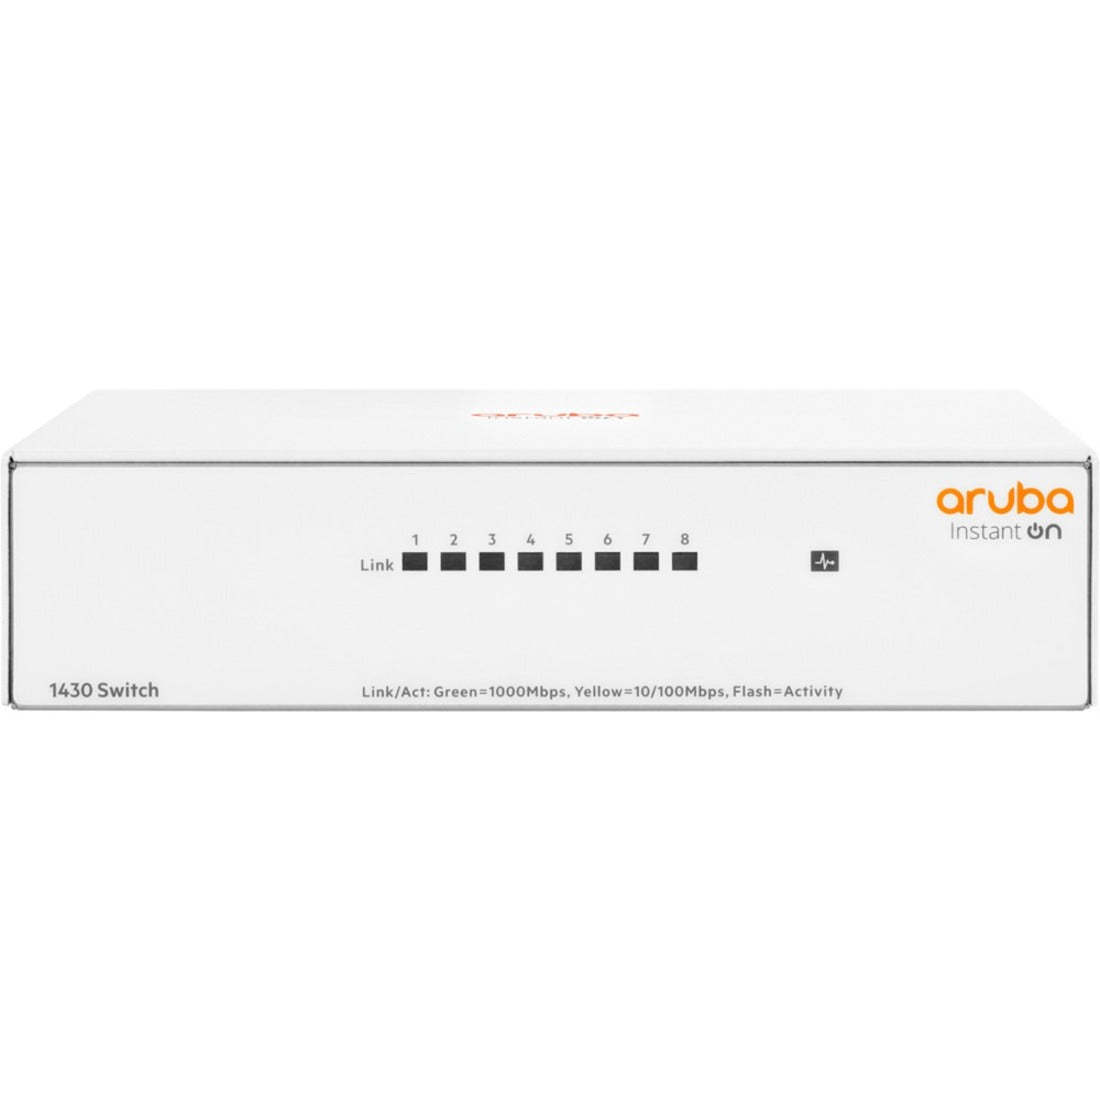 Aruba Instant On 1430 8G Switch, 8-Port Gigabit Ethernet Network, Business Use